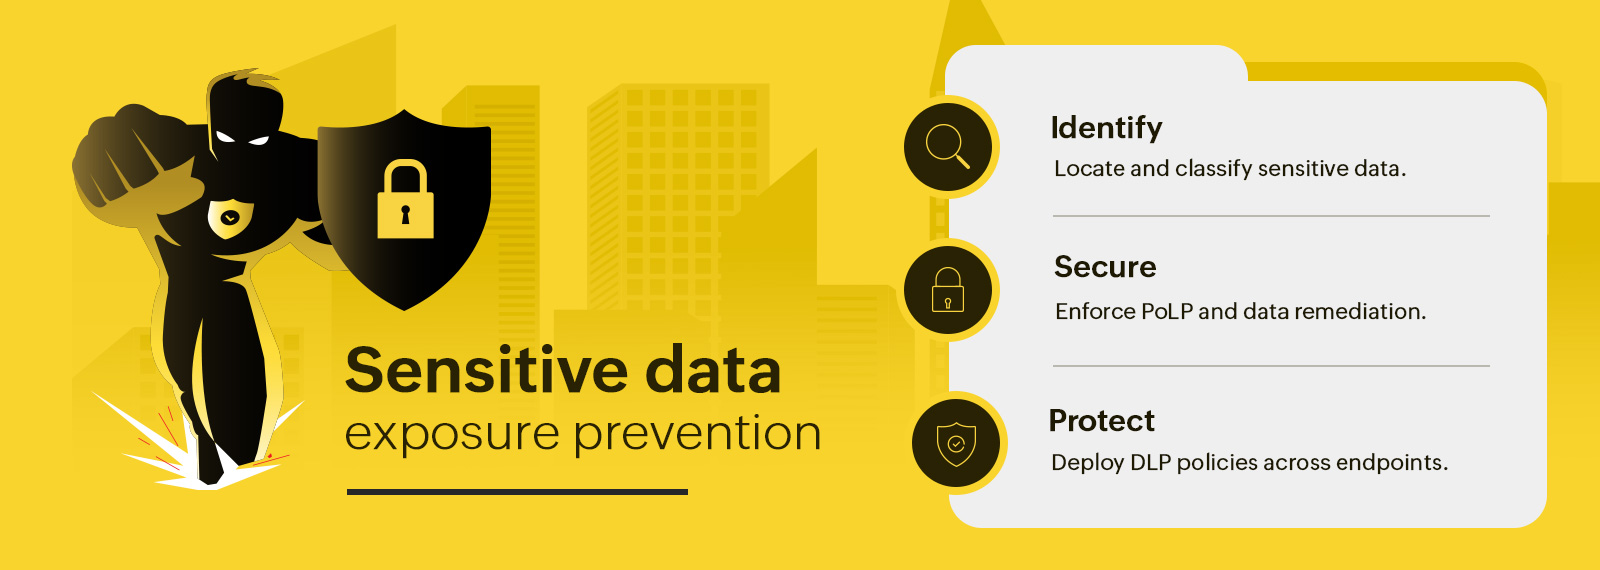 Sensitive data exposure prevention